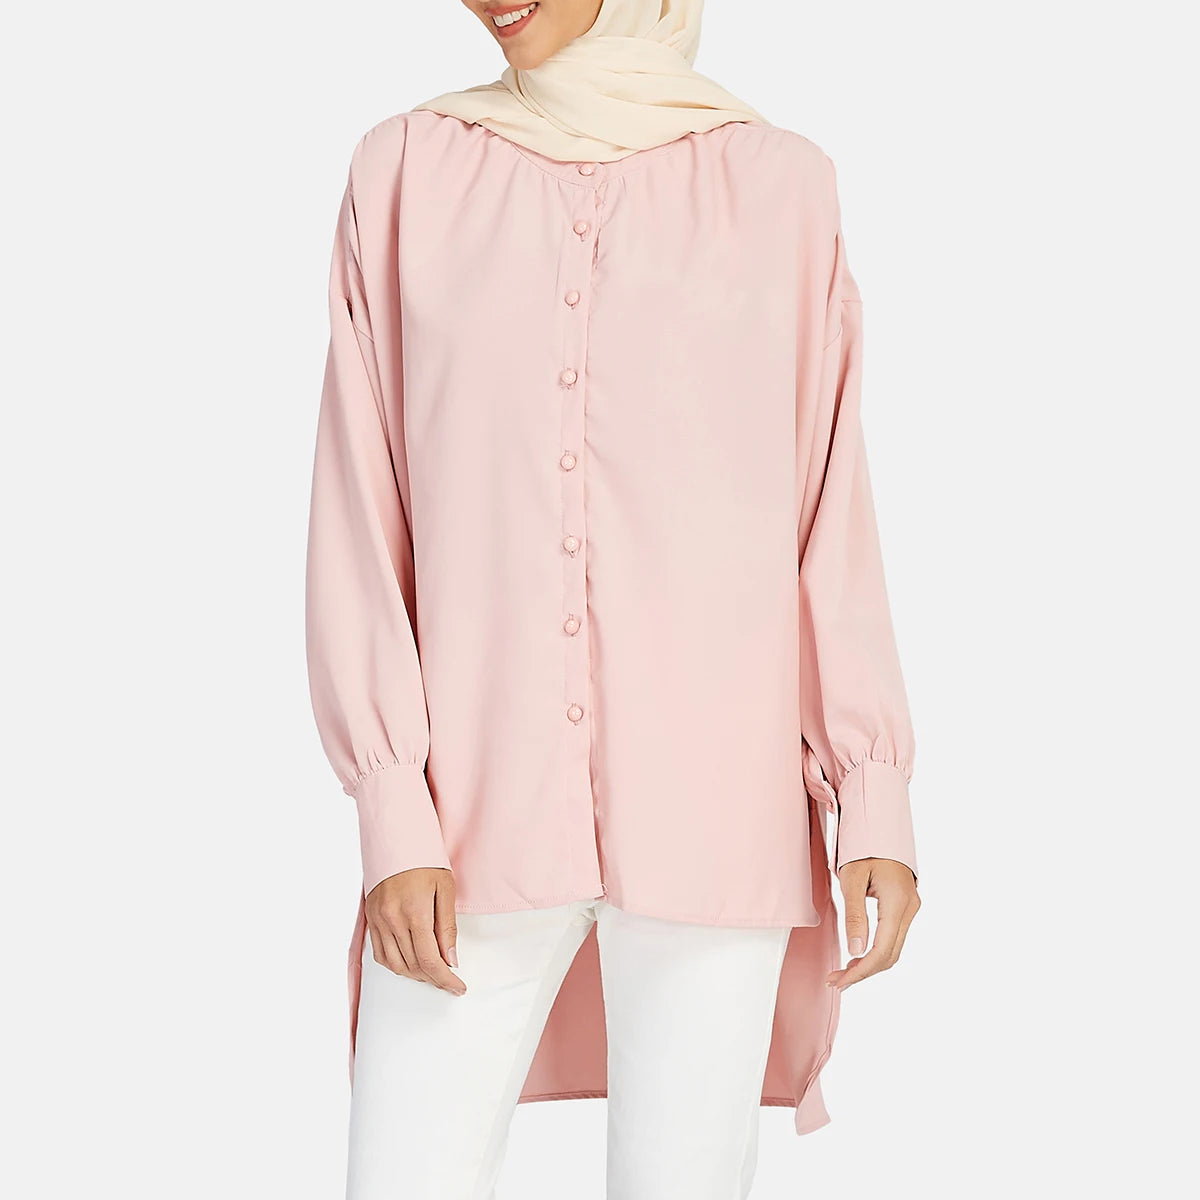 Long Tops for Women Fashion Loose Shirts Muslim Ramadan Islamic Dubai Turkey Elegant Arabic Tunics Plus Size Blouse S-5XL Blusas